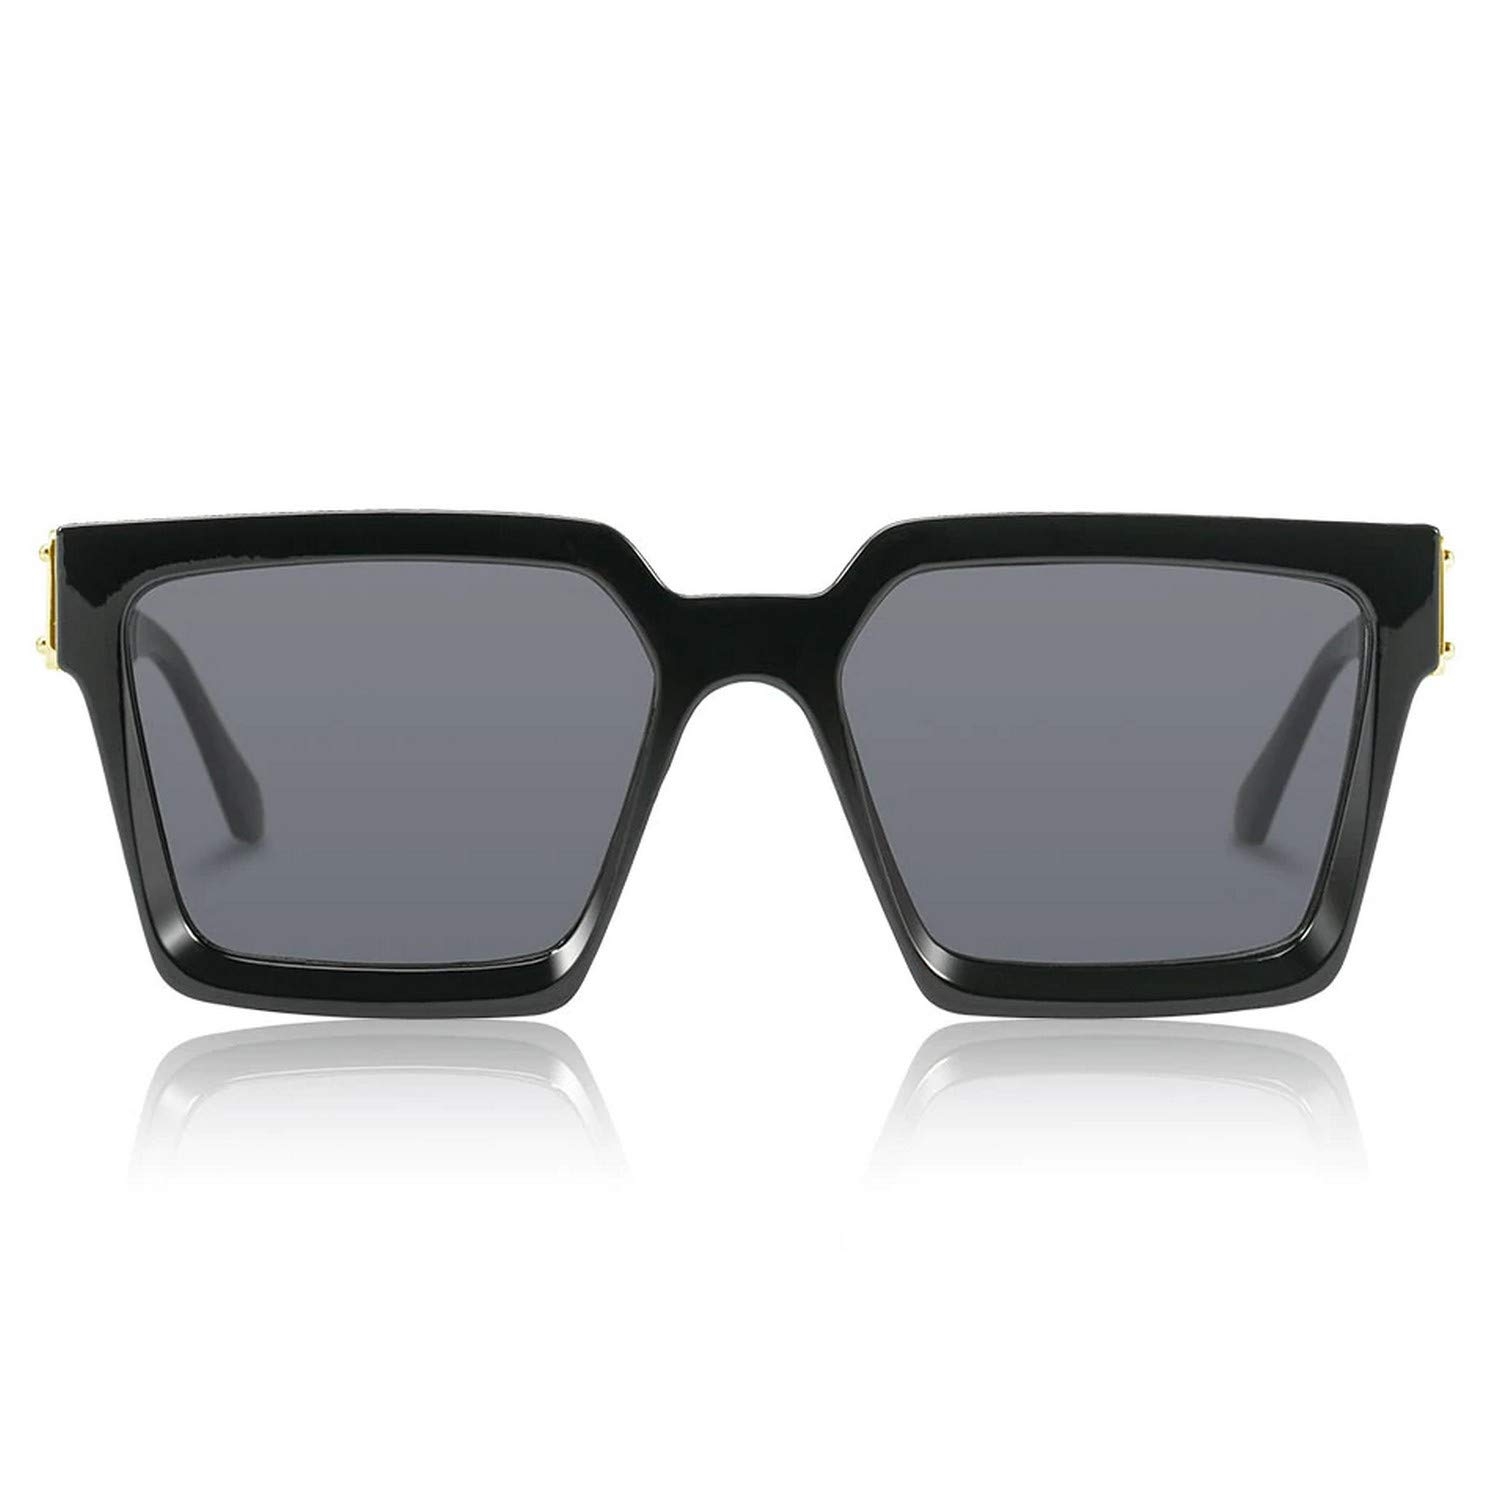 CREATURE | CREATURE Black Oversized Square Sunglass For Mens (Lens-Black|Frame-Black)